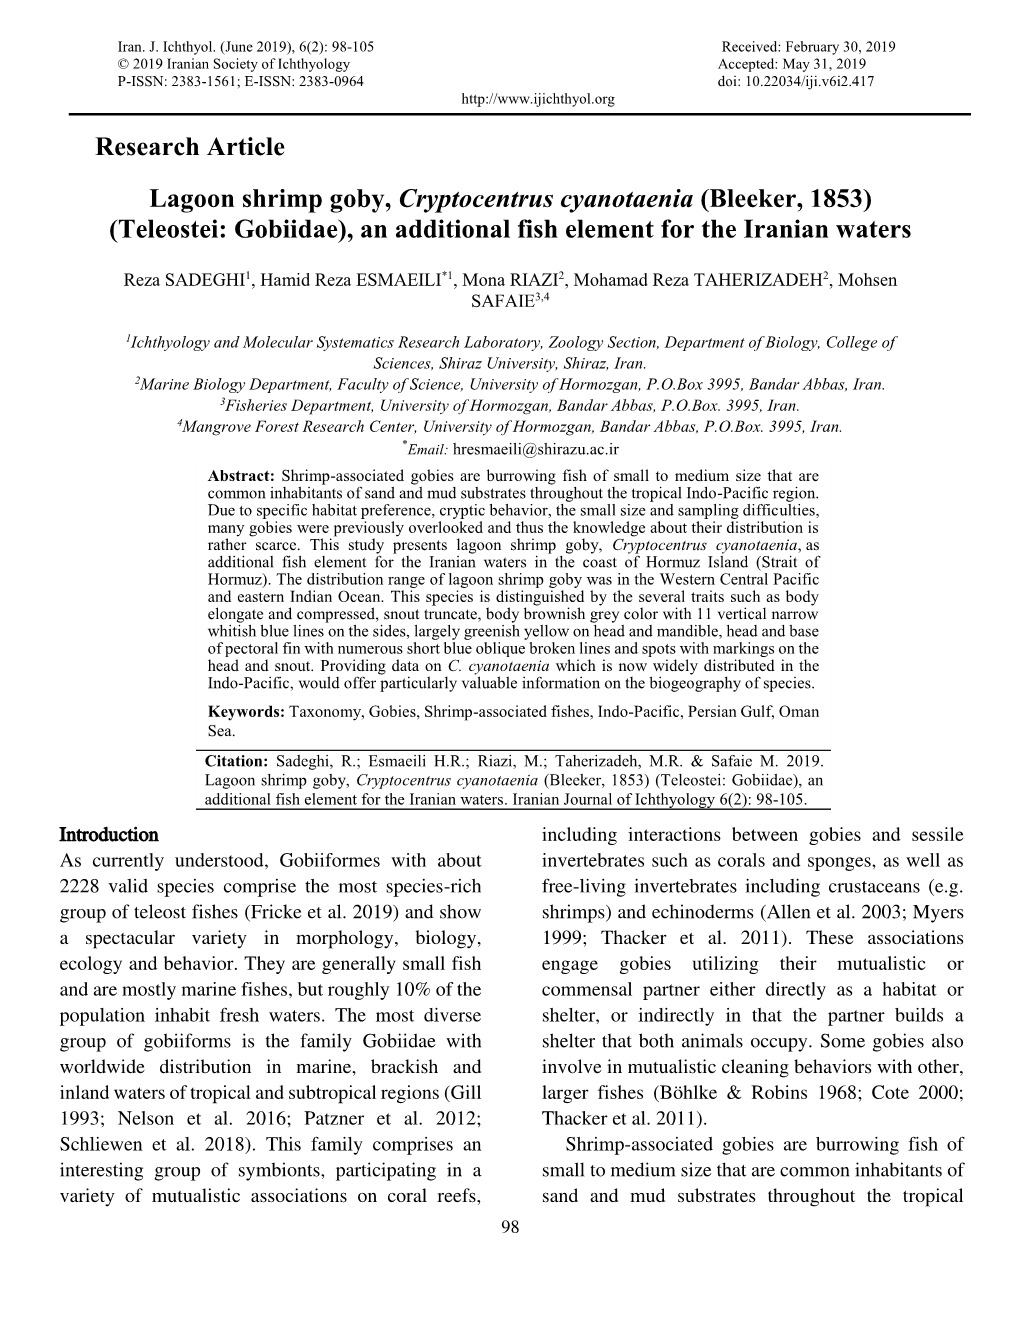 Research Article Lagoon Shrimp Goby, Cryptocentrus Cyanotaenia